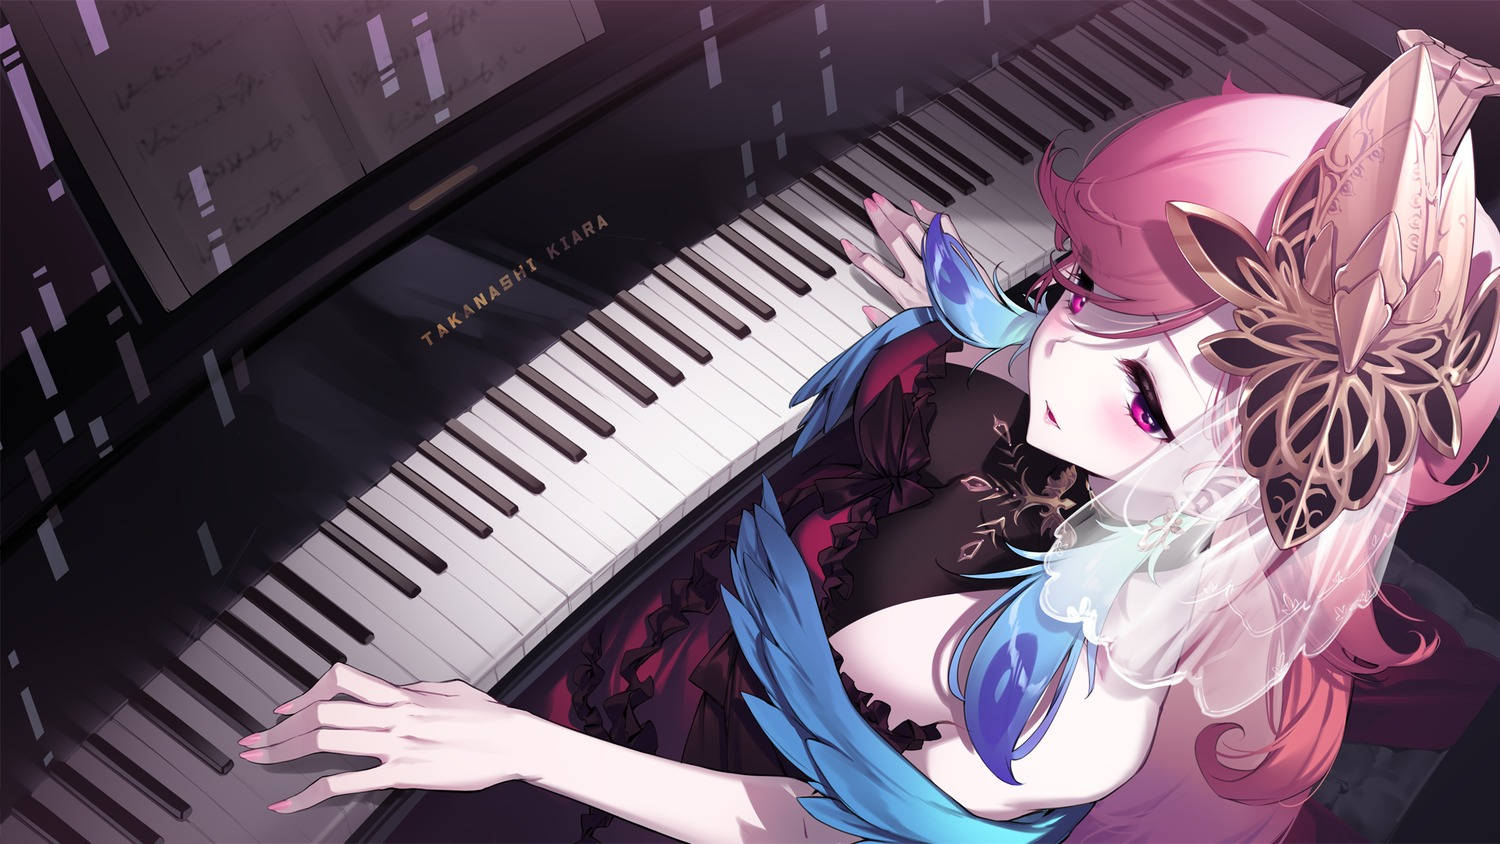  Klavier Anime Hintergrundbild 1500x844. Download Pianist Kiara Aesthetic Anime Art Desktop Wallpaper